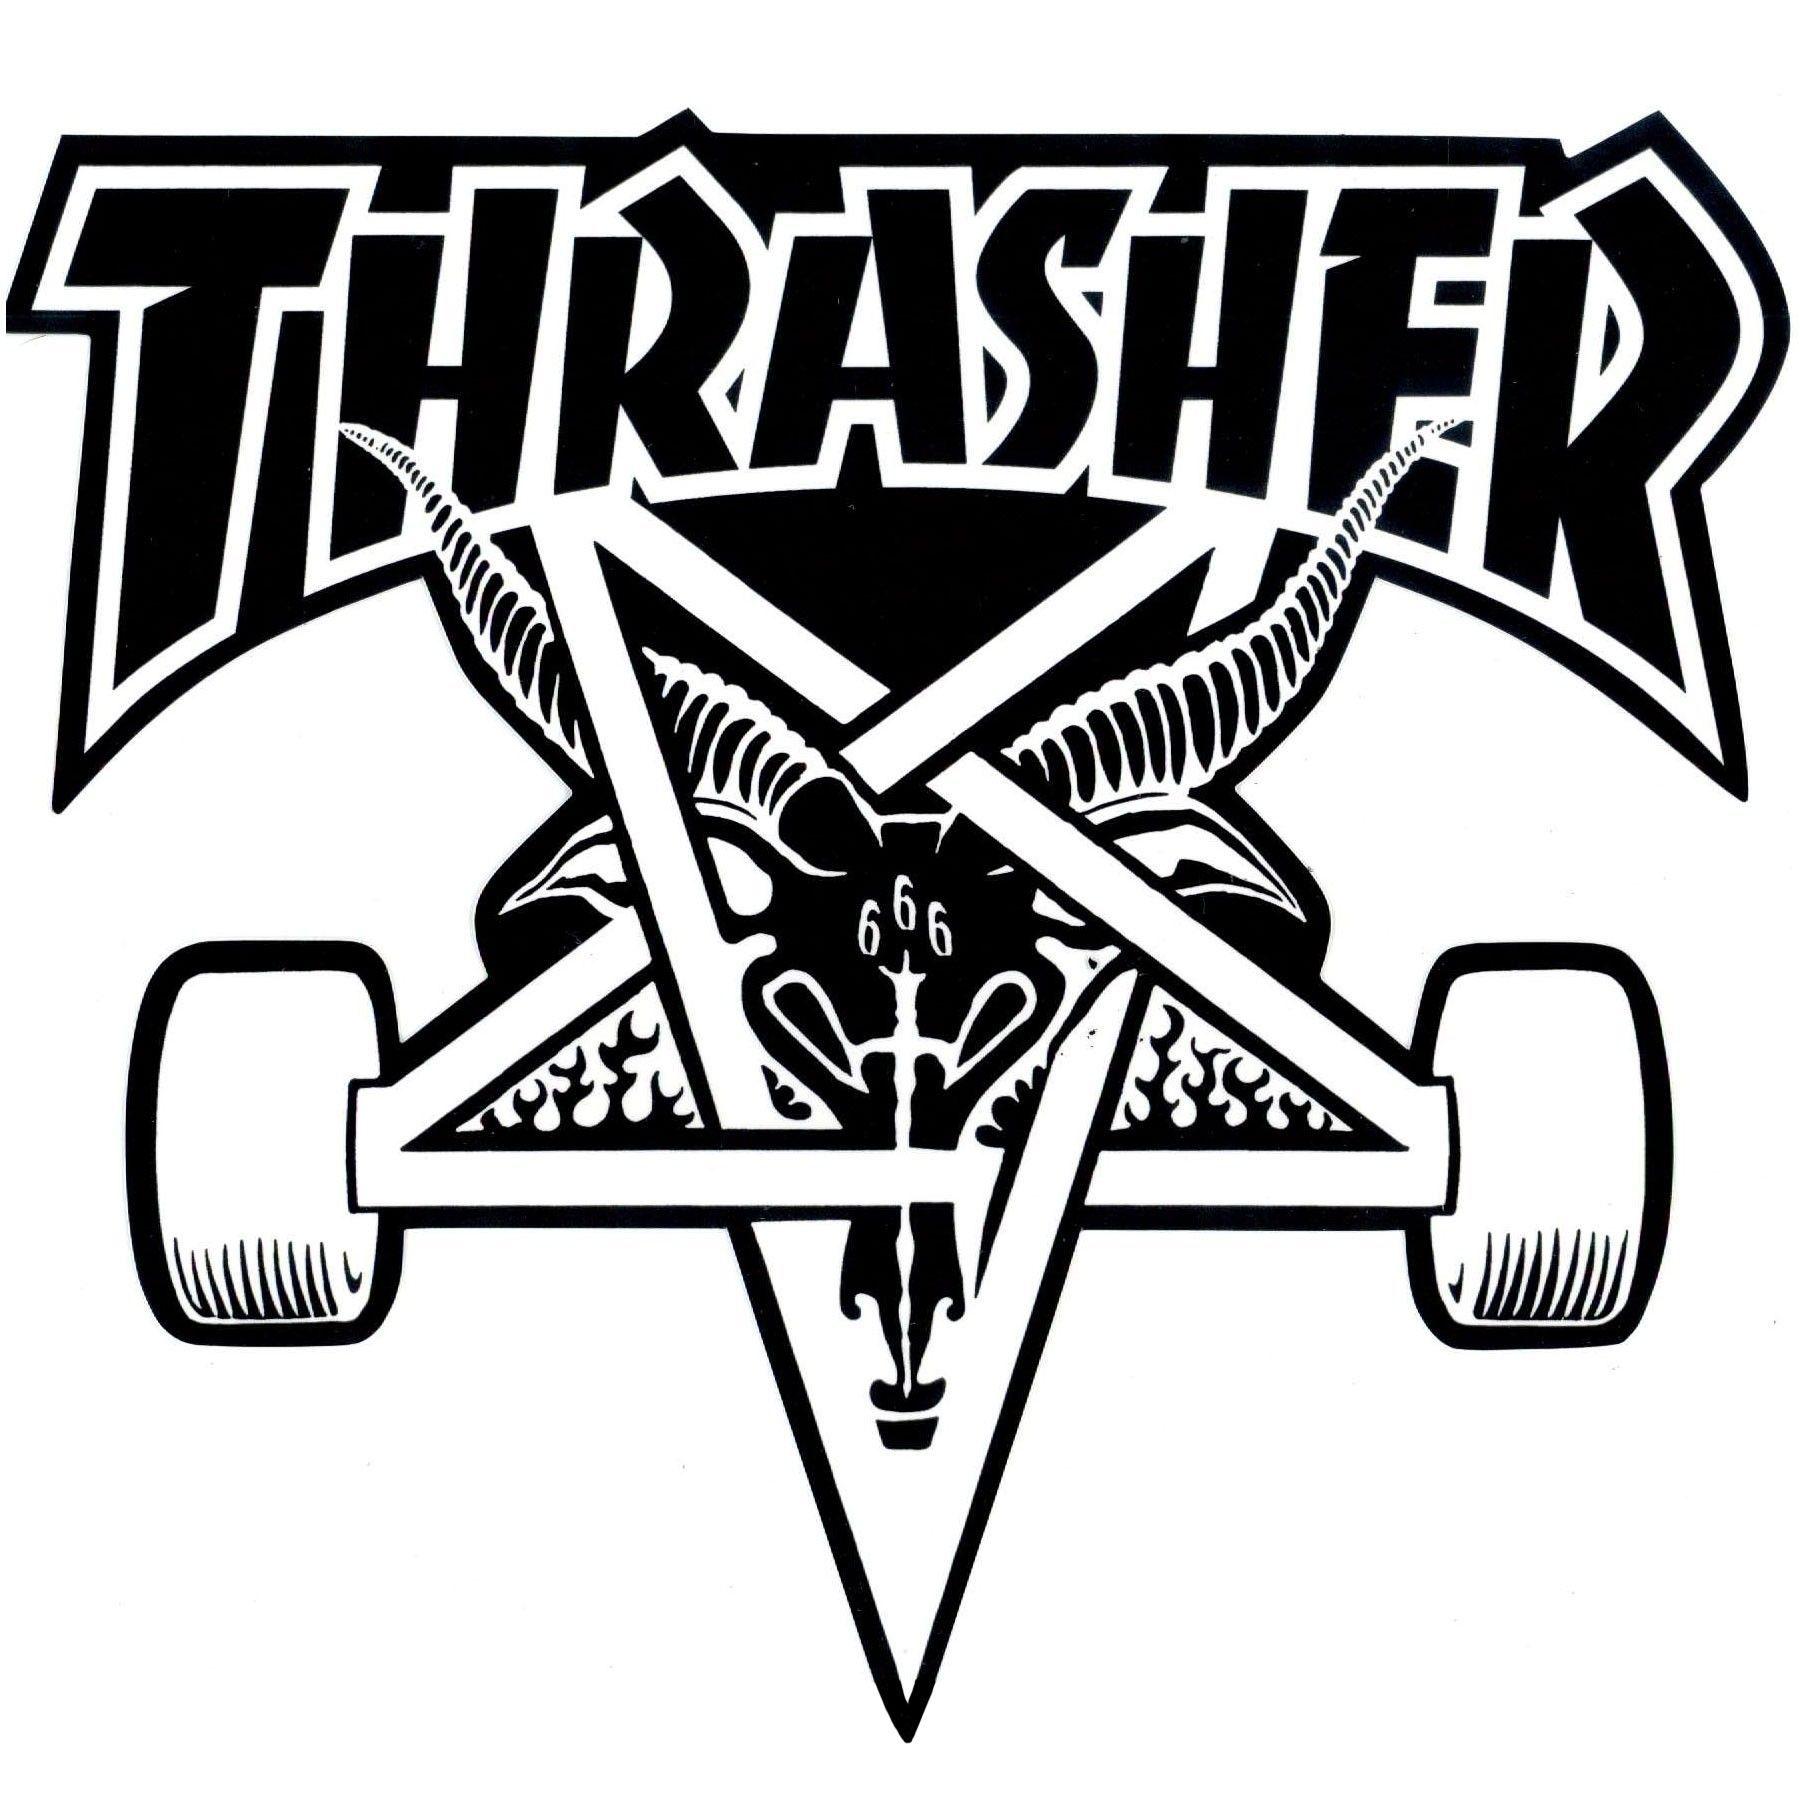 Thrasher Logo - thrasher logo - Buscar con Google | Tt | Pinterest | Thrasher ...